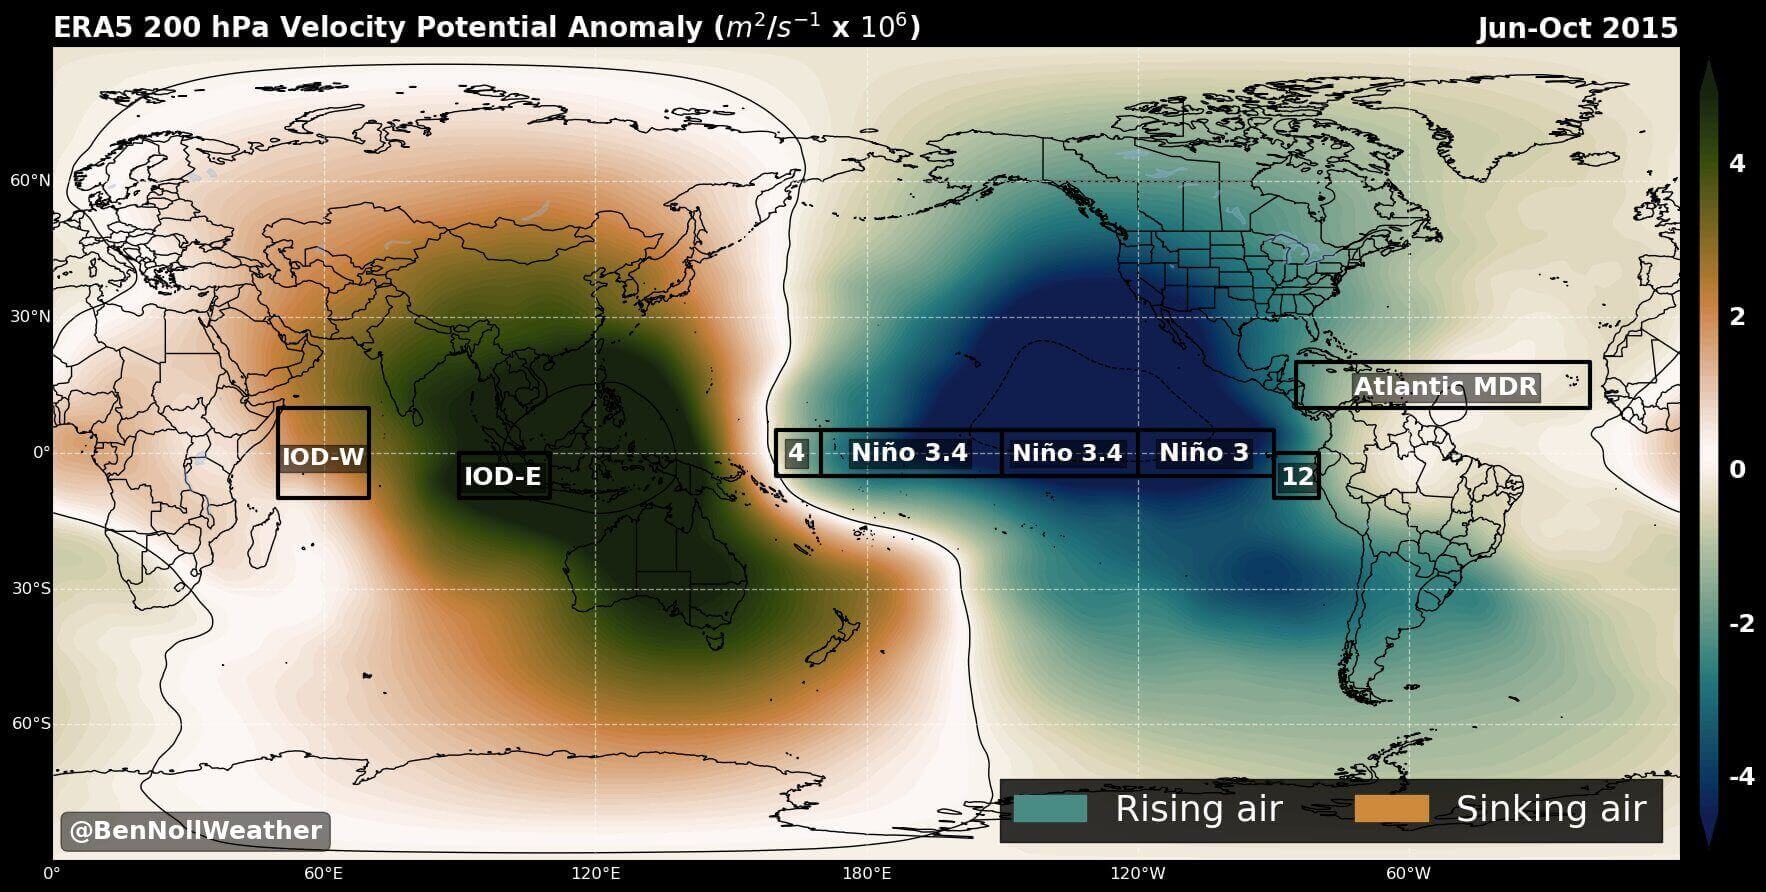 el-nino-watch-winter-weather-season-forecast-united-states-enso-circulation-pressure-pattern-atmospheric-response-reanalysis